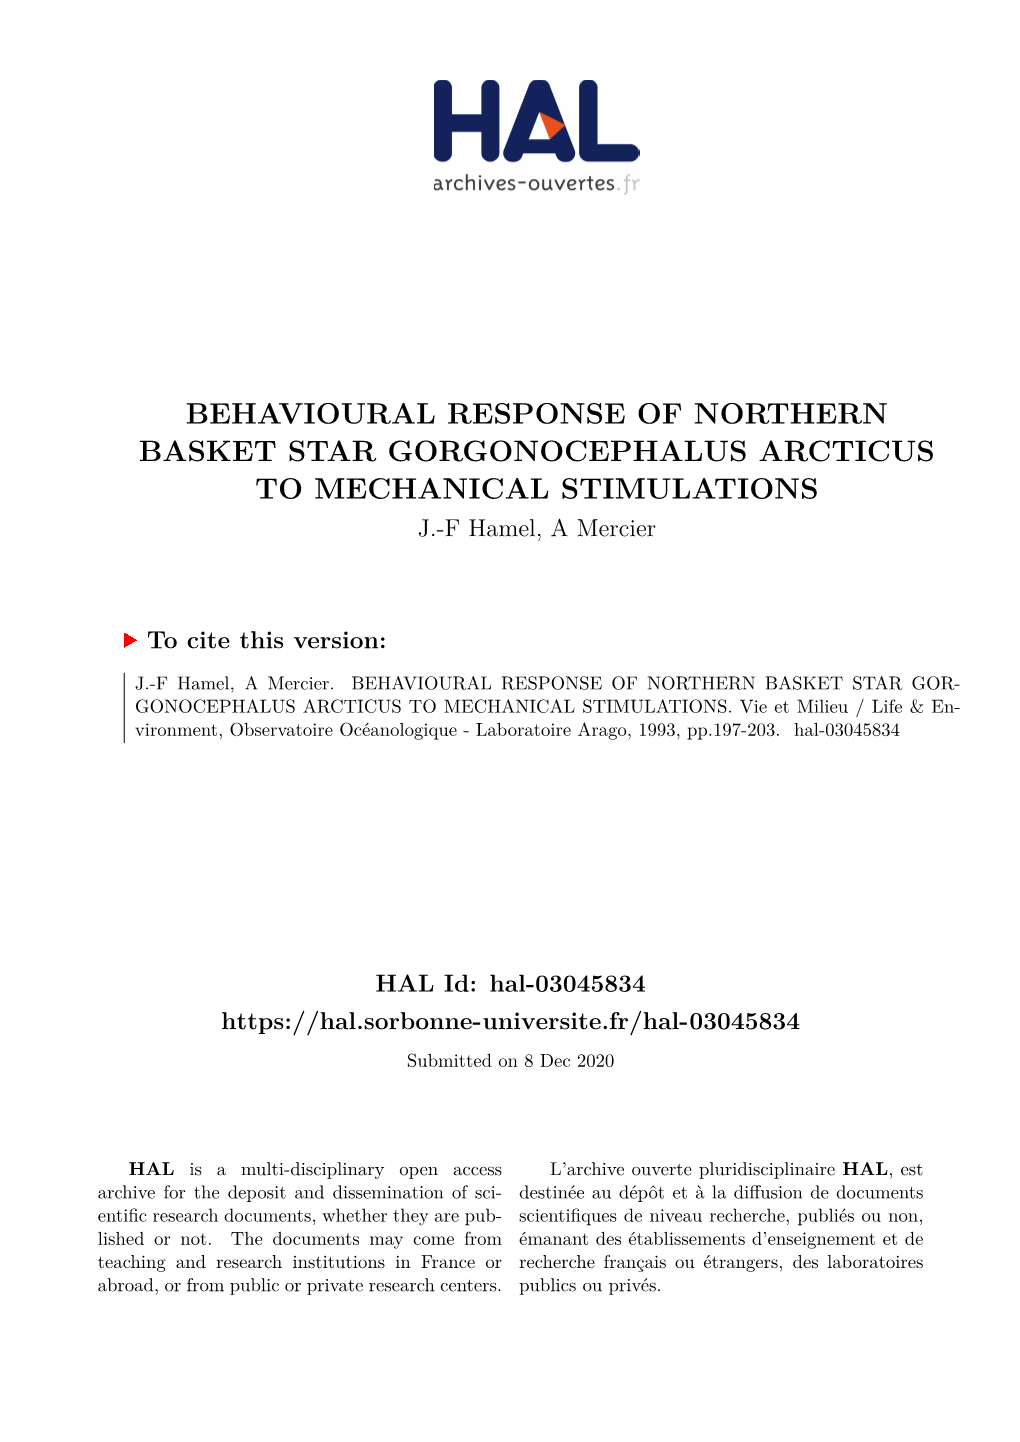 BEHAVIOURAL RESPONSE of NORTHERN BASKET STAR GORGONOCEPHALUS ARCTICUS to MECHANICAL STIMULATIONS J.-F Hamel, a Mercier